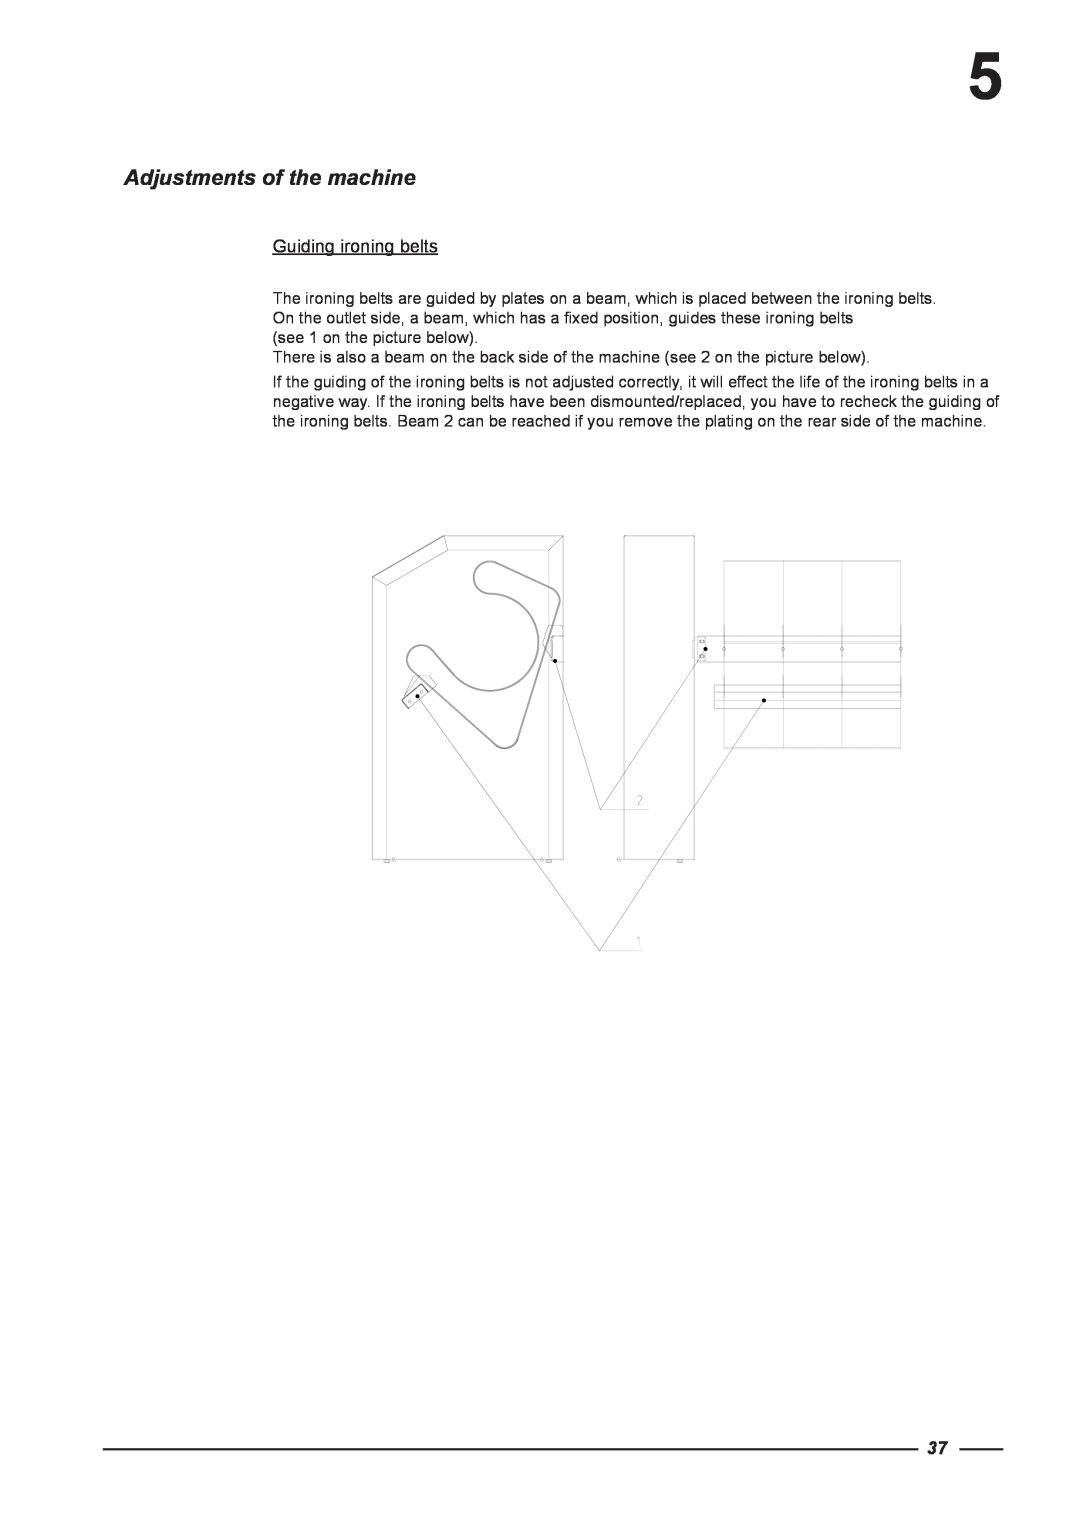 Alliance Laundry Systems CI 2050/325, CI 1650/325 instruction manual Adjustments of the machine, Guiding ironing belts 